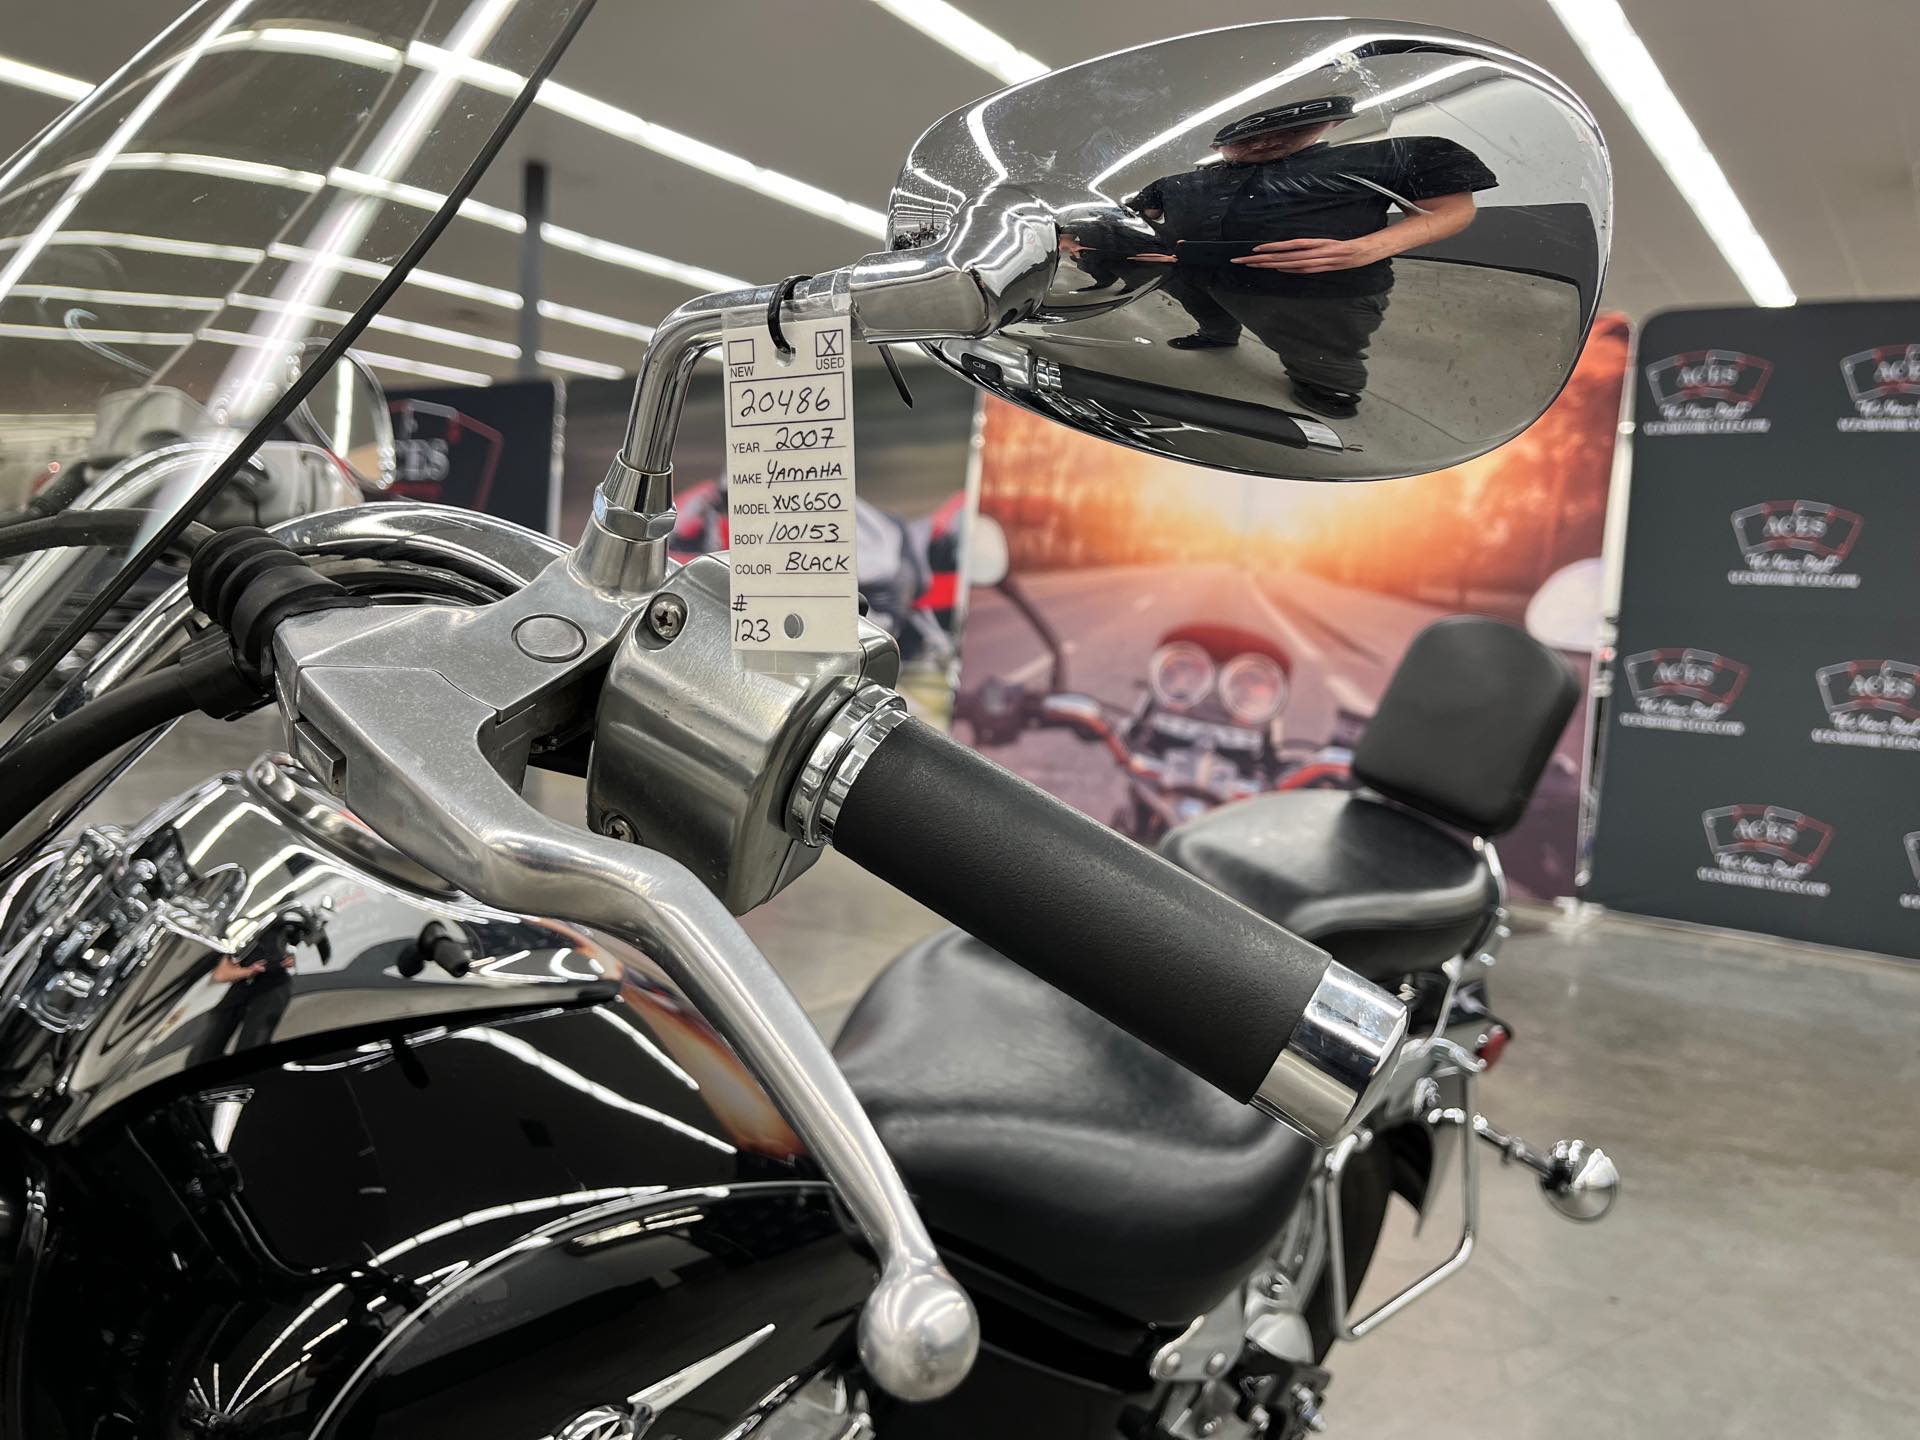 2007 Yamaha V Star Custom at Aces Motorcycles - Denver